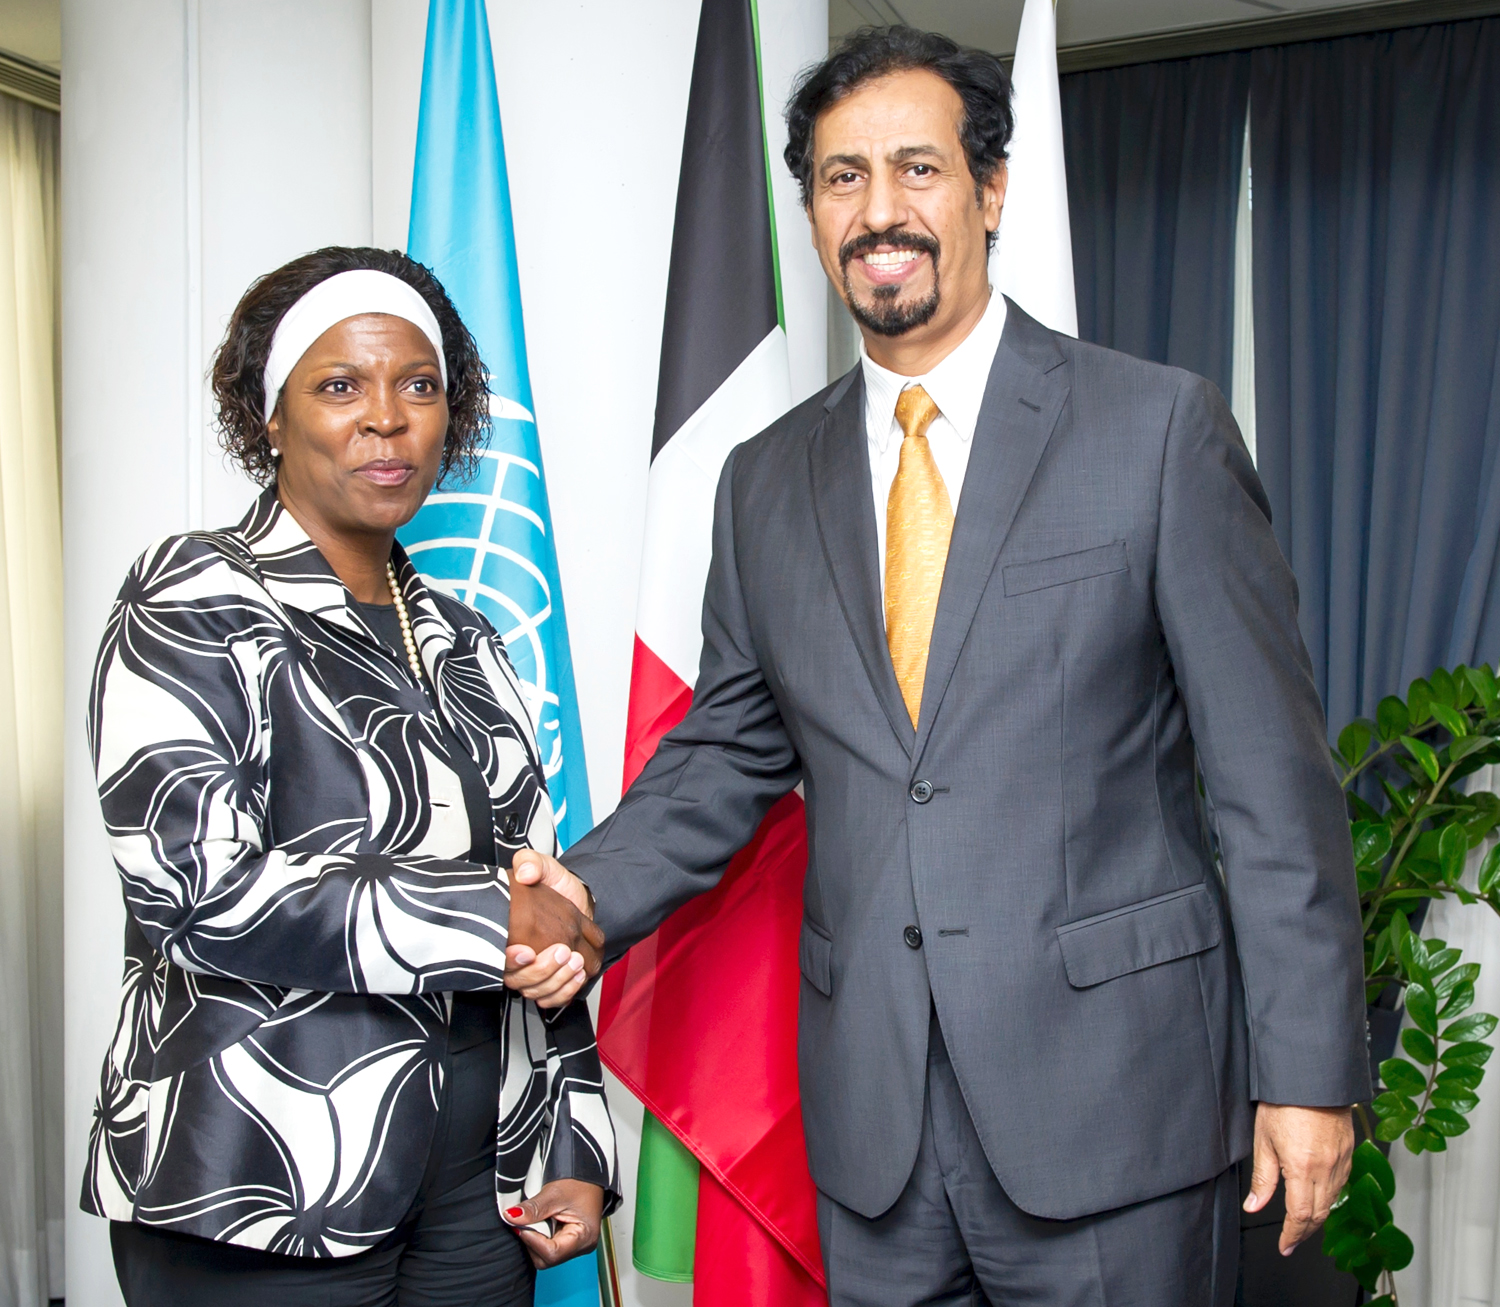 WFP Executive Director Ertharin Cousin welcomes Kuwait's Ambassador to Italy Sheikh Ali Al-Khaled Al-Sabah